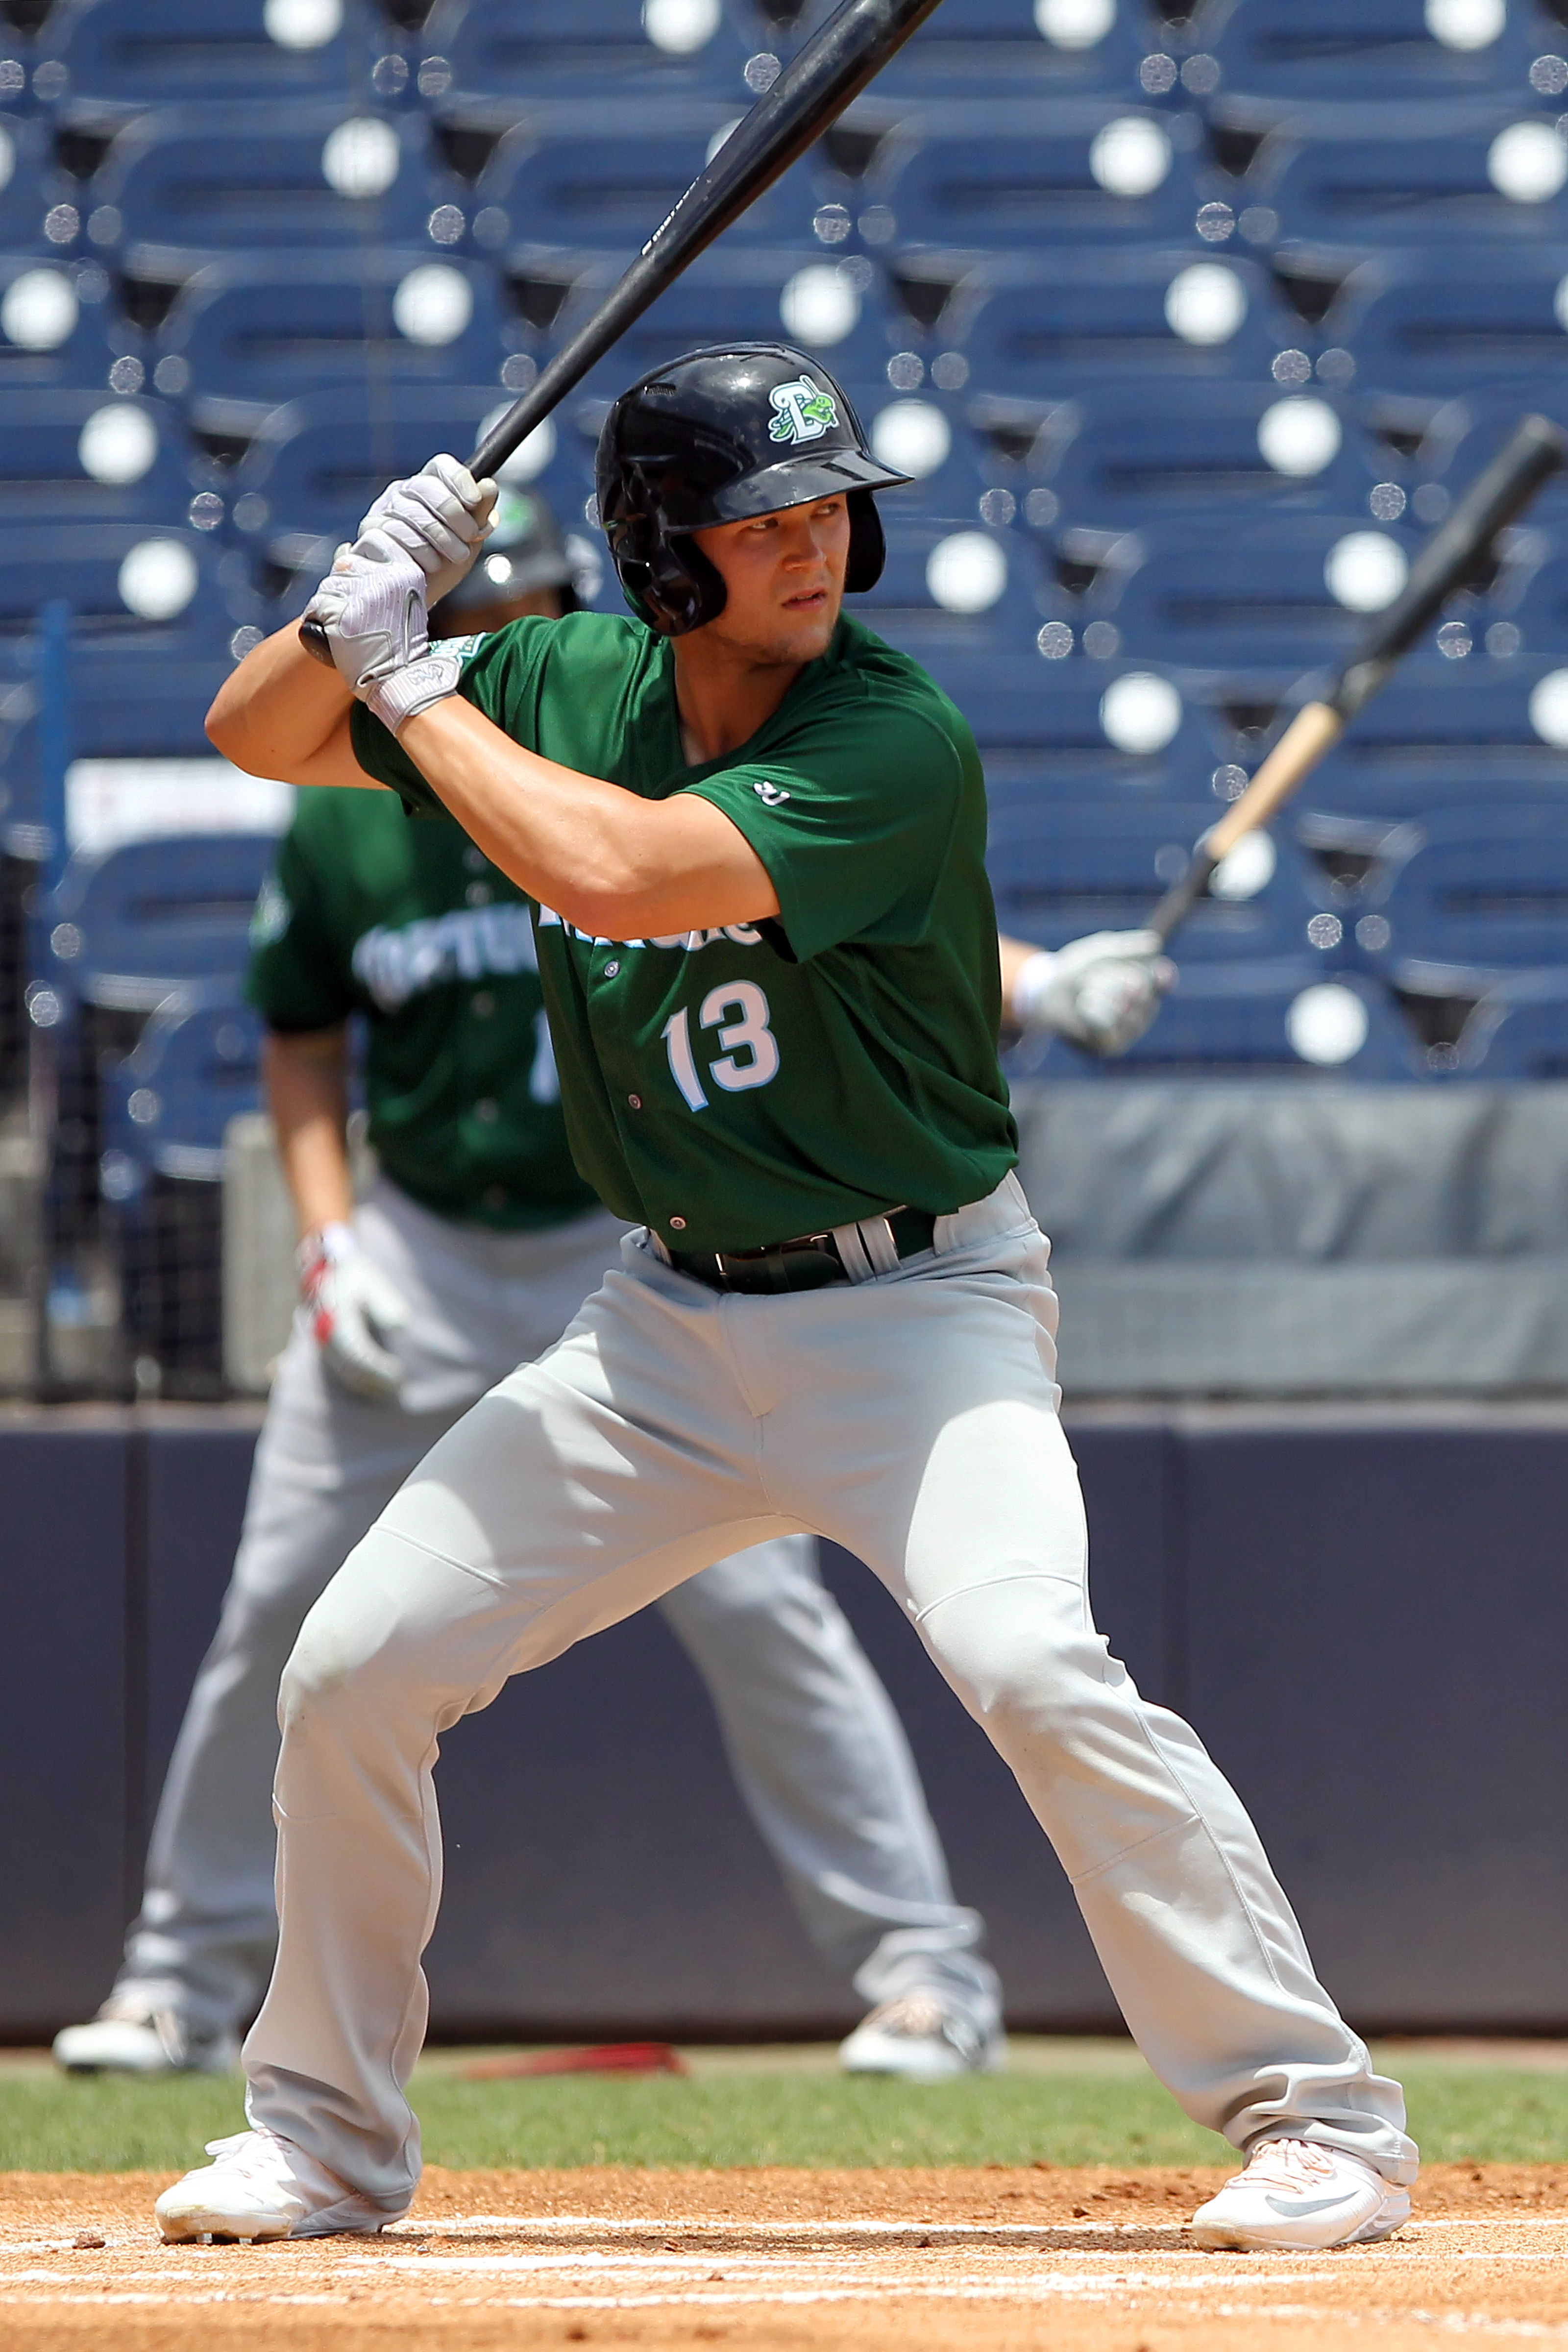 MiLB: APR 30 Florida State League - Tortugas at Yankees